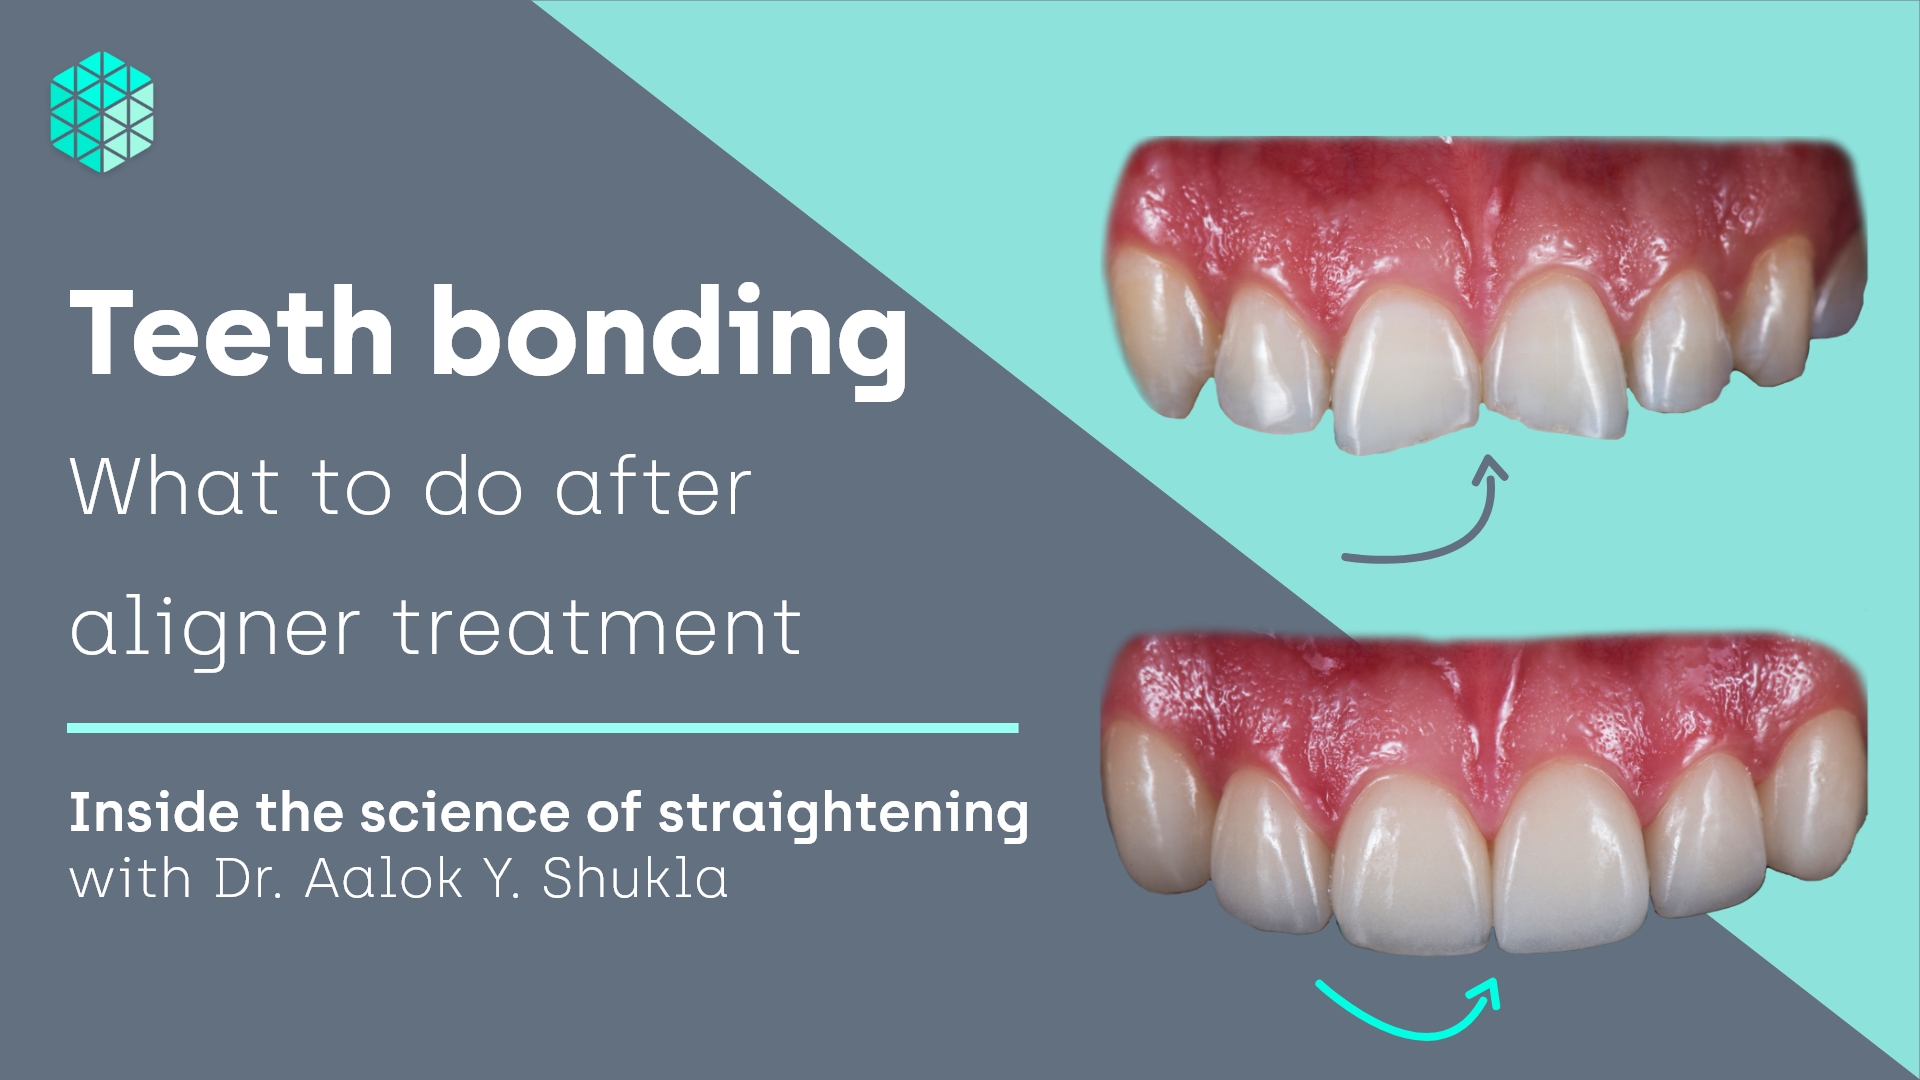 Teeth bonding - After aligner treatment